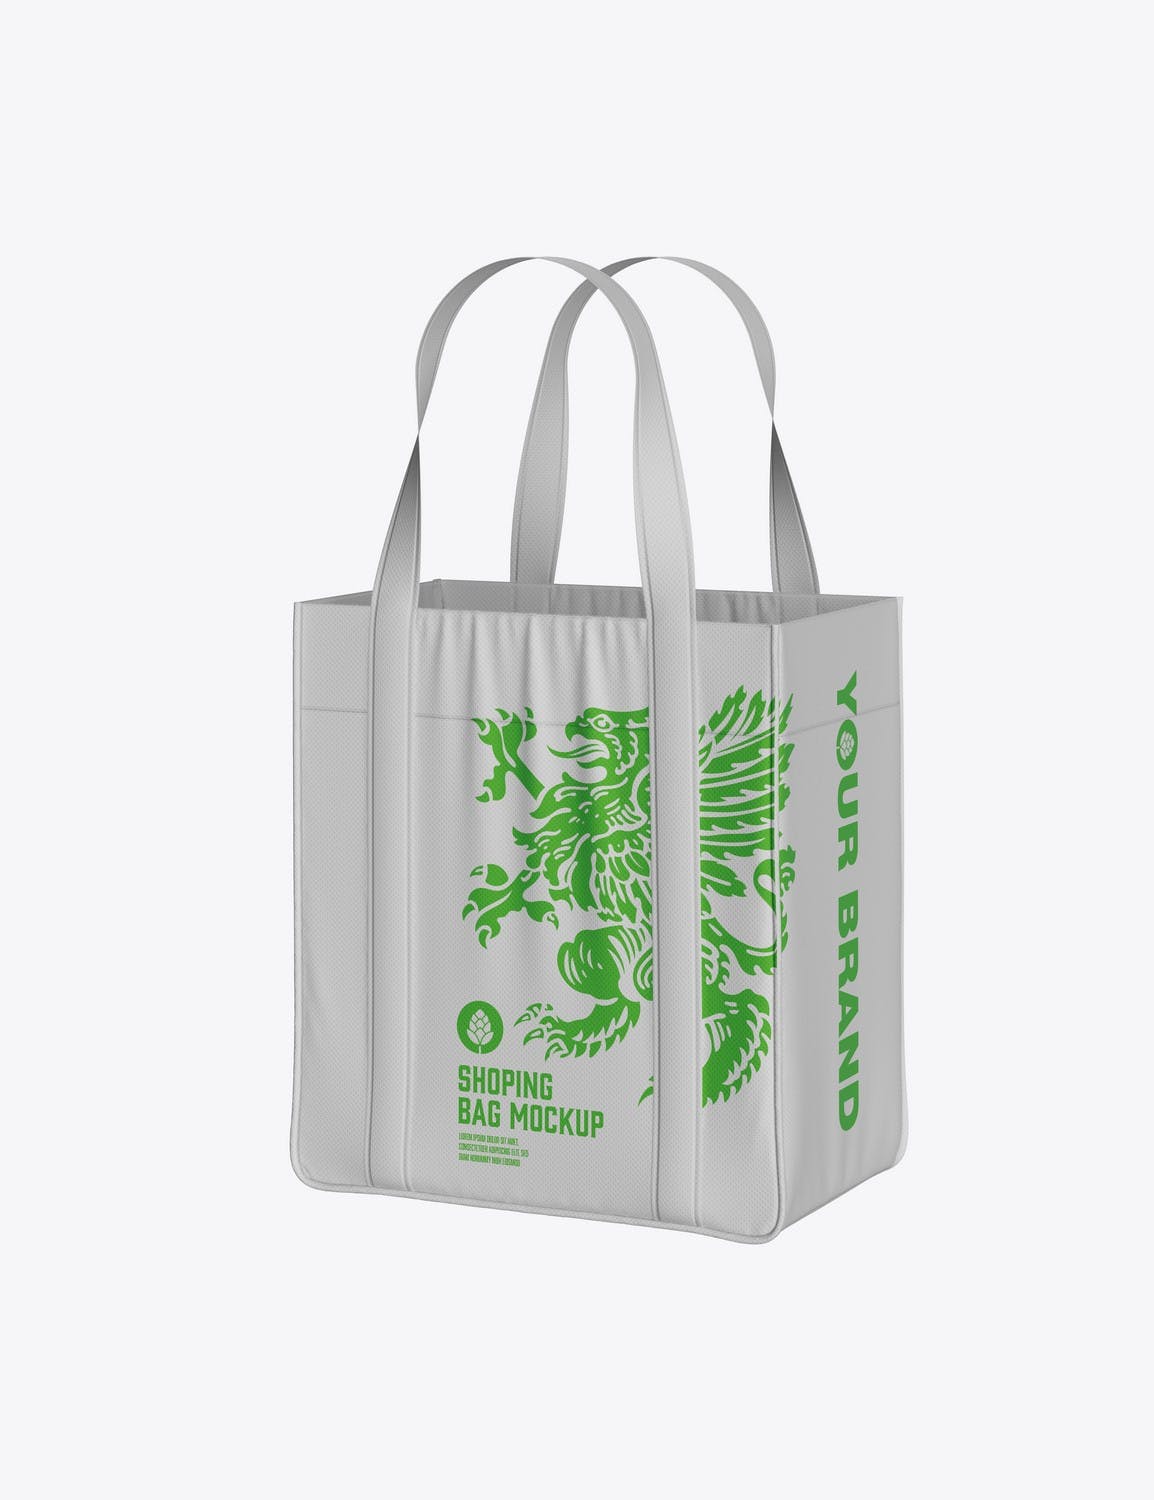 生态帆布袋包装Logo设计样机 Eco Canvas Bag Mockup 样机素材 第6张